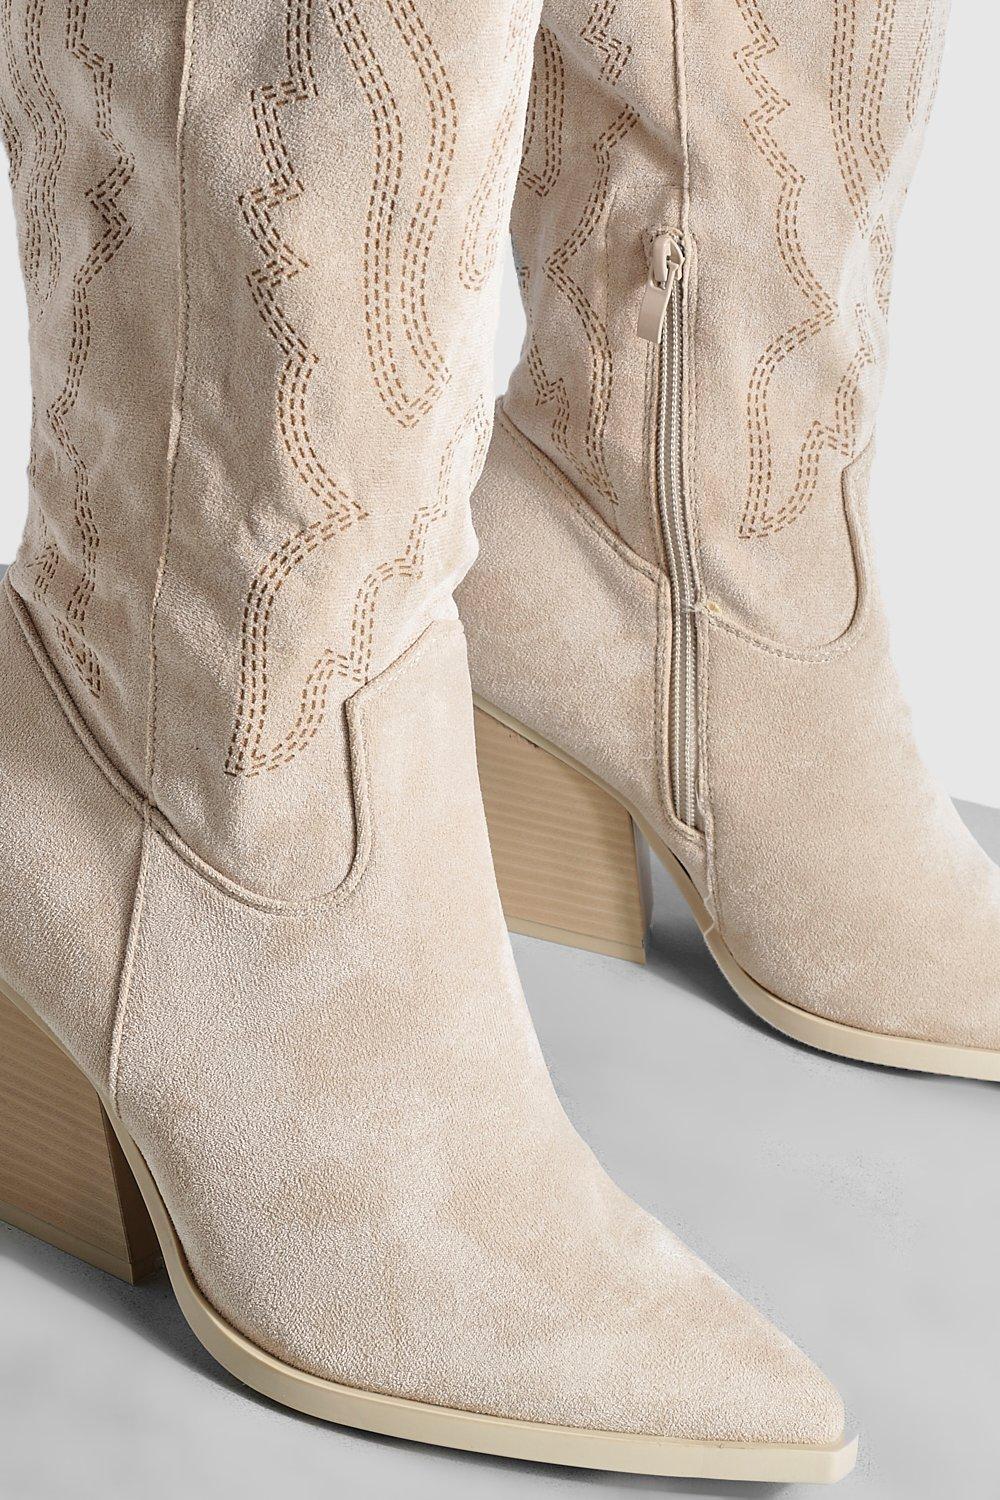 Stitch Detail Western Cowboy Boots